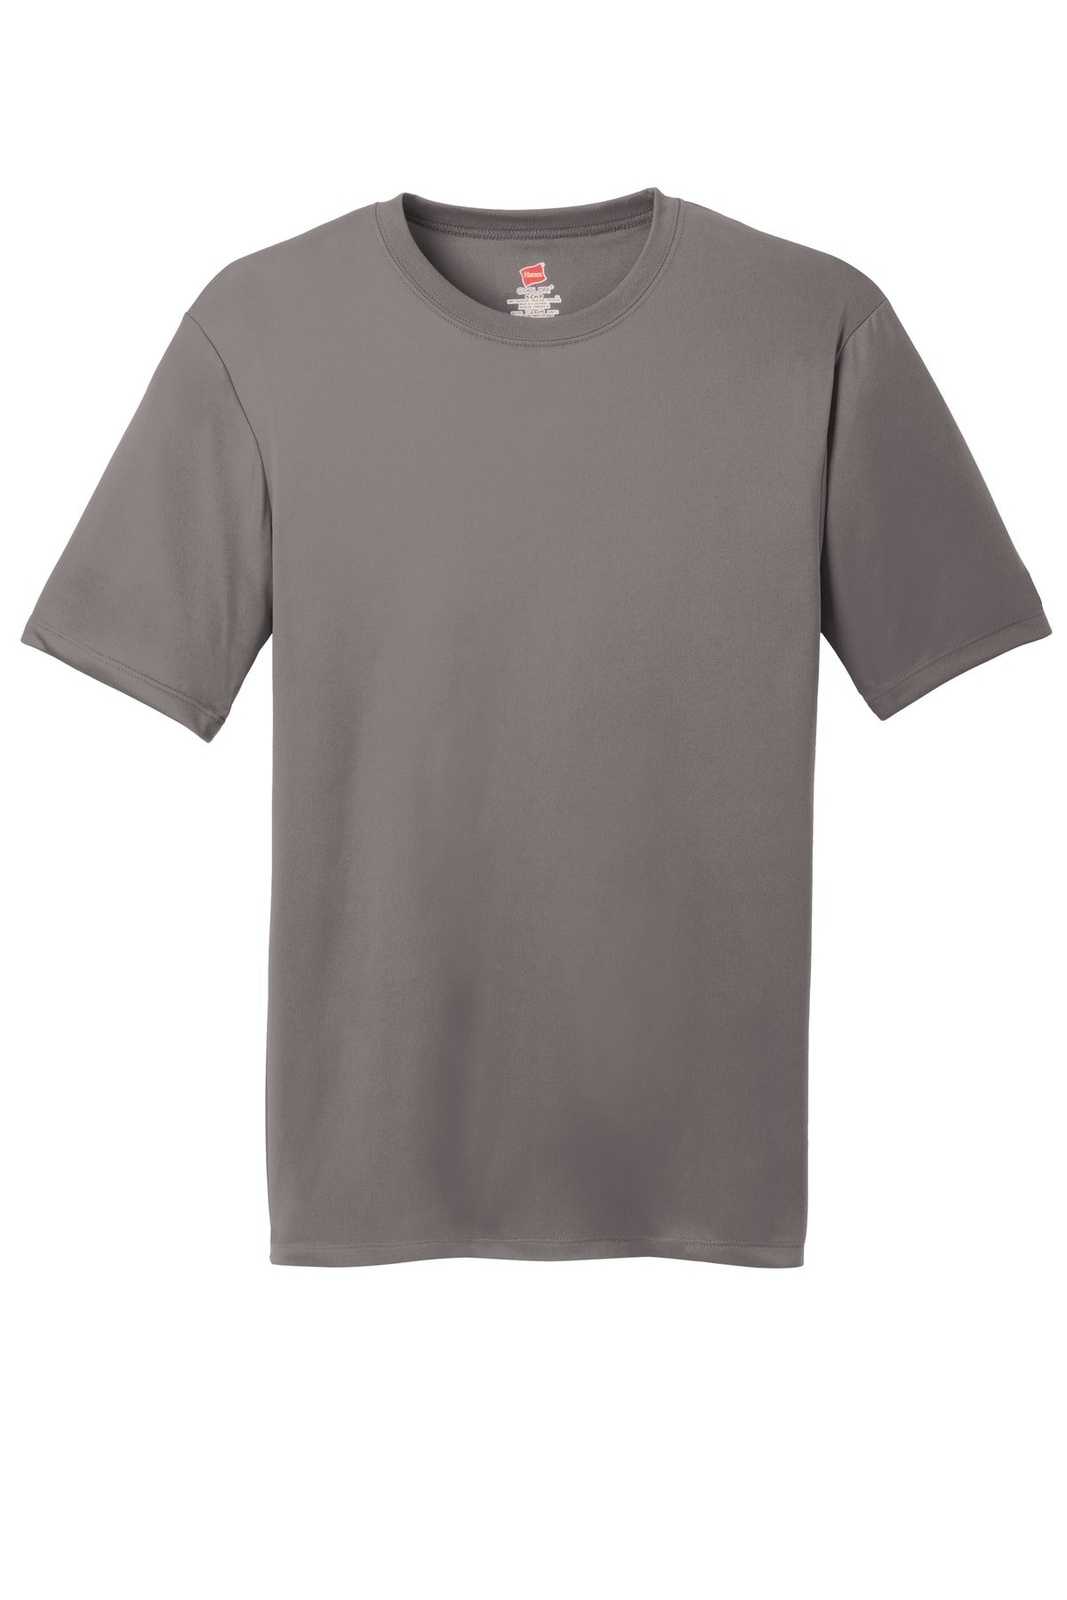 Hanes 4820 Cool Dri Performance T-Shirt - Graphite - HIT a Double